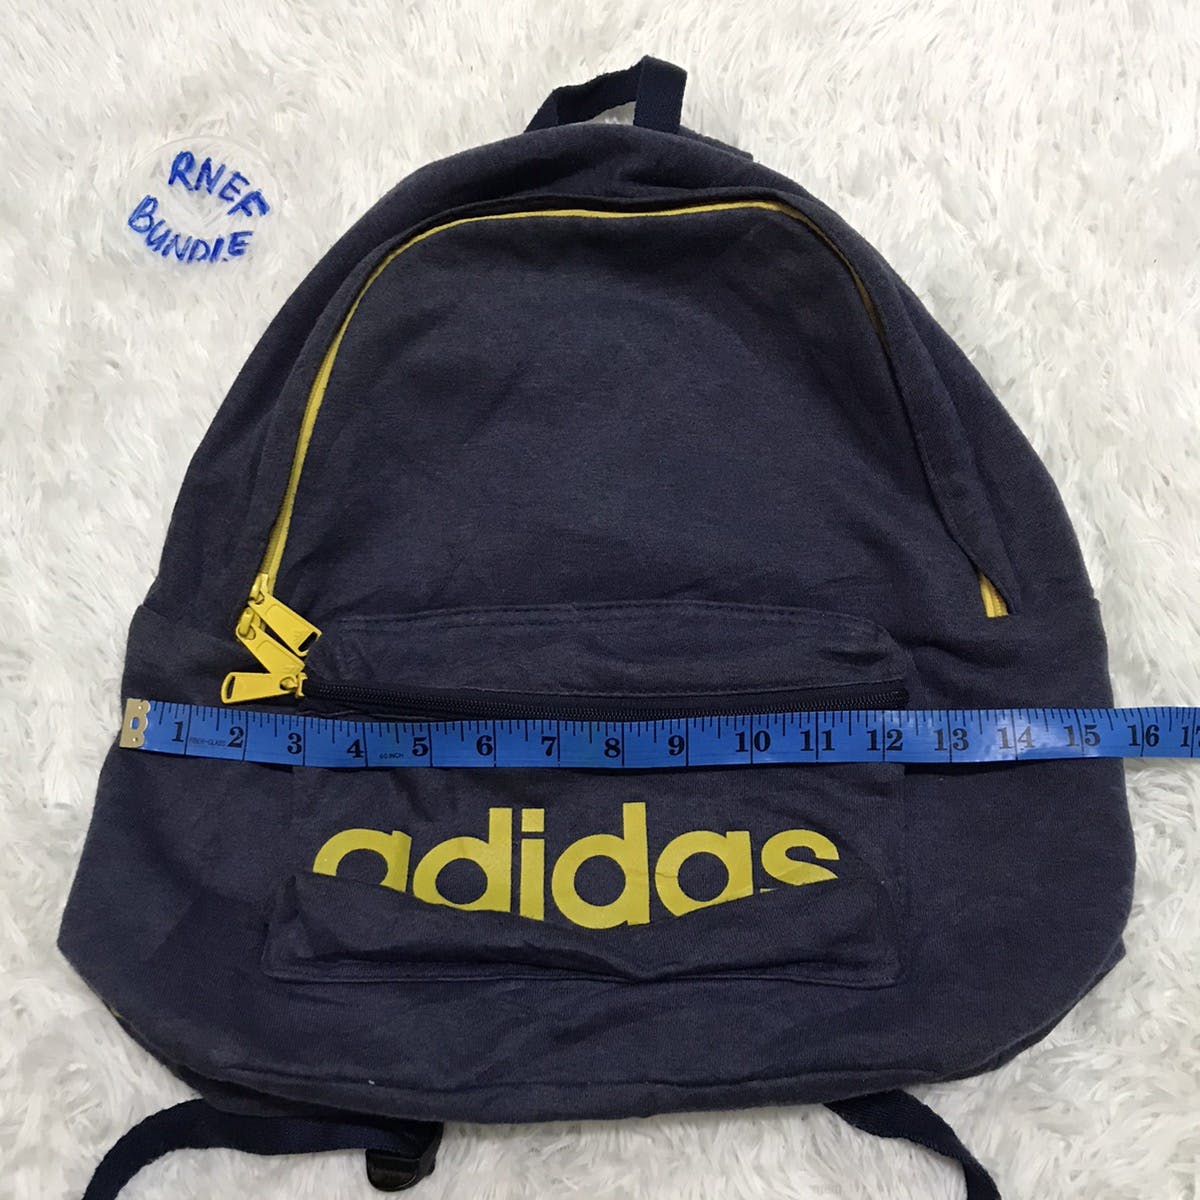 Adidas Backpack - 7